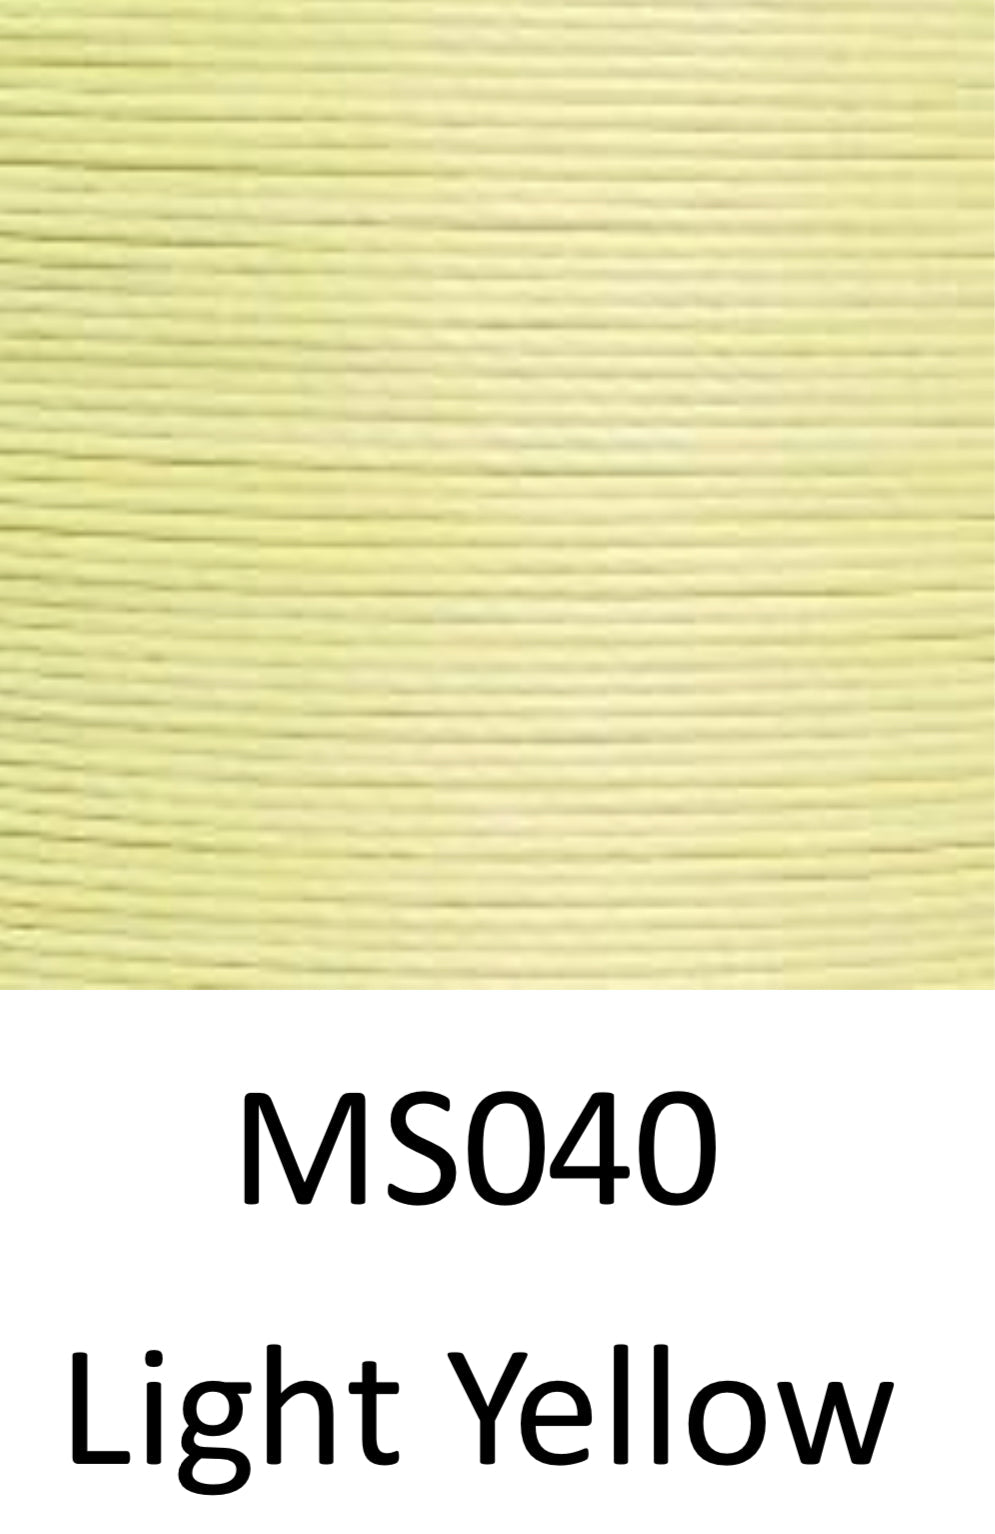 Lin Meisi | M60 0,65 mm | Bobines de 50 m